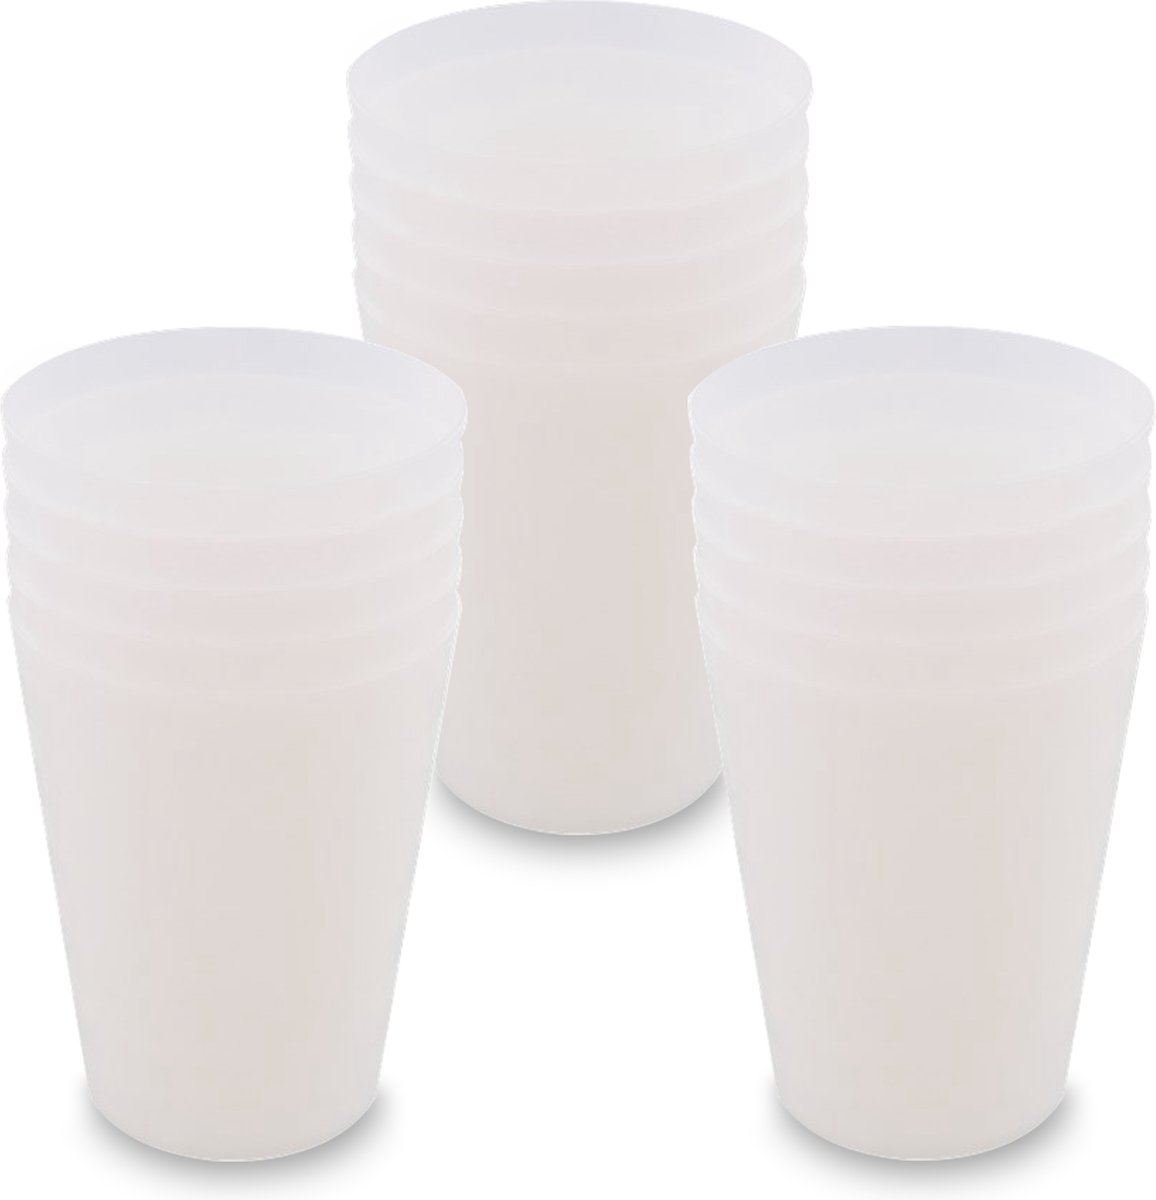 In Round Herbruikbare Plastic Drink bekers – 15 Stuks – Wit